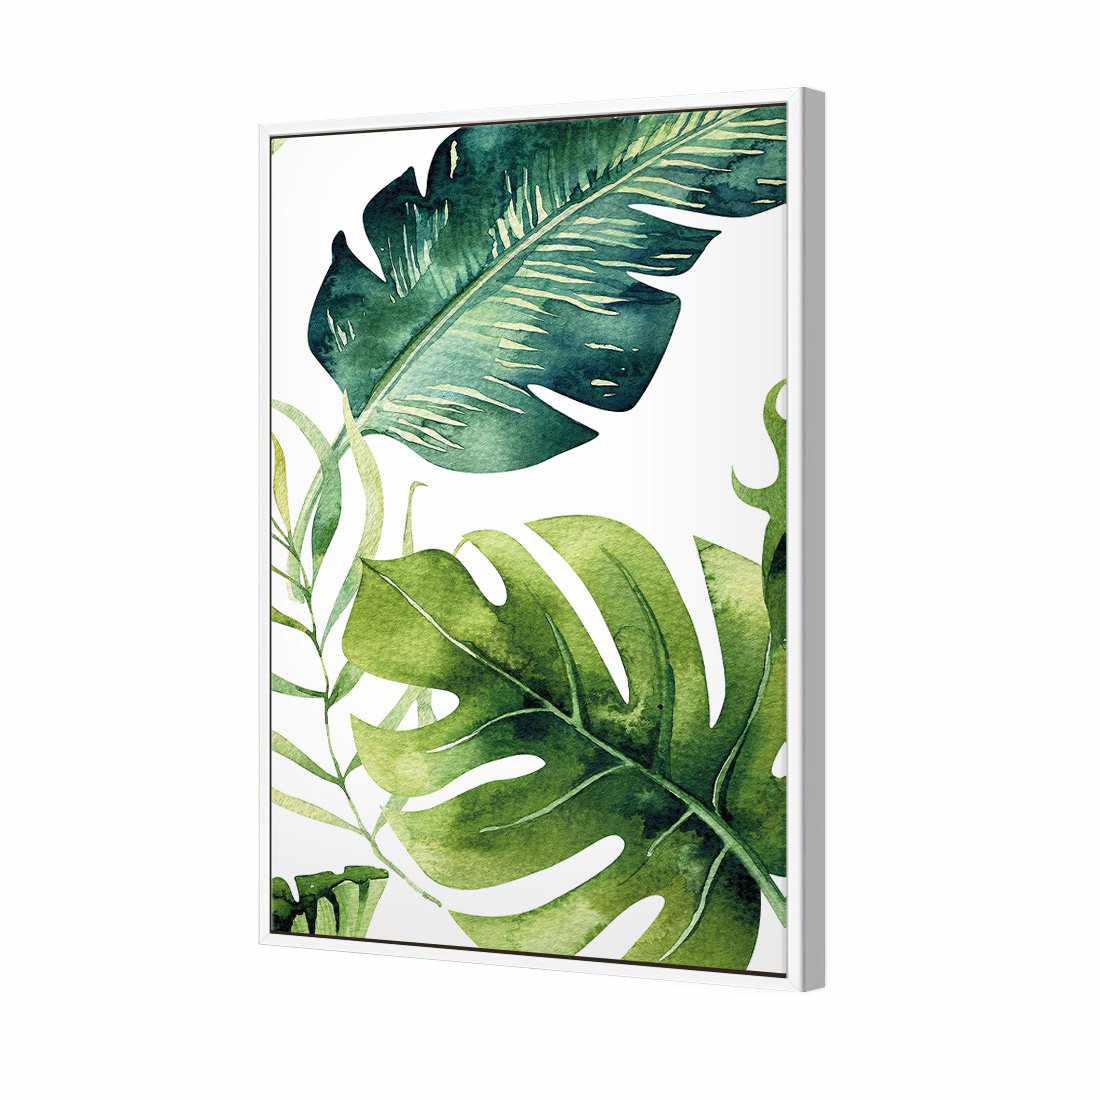 Fascinating Foliage Version 02 Canvas Art-Canvas-Wall Art Designs-45x30cm-Canvas - White Frame-Wall Art Designs